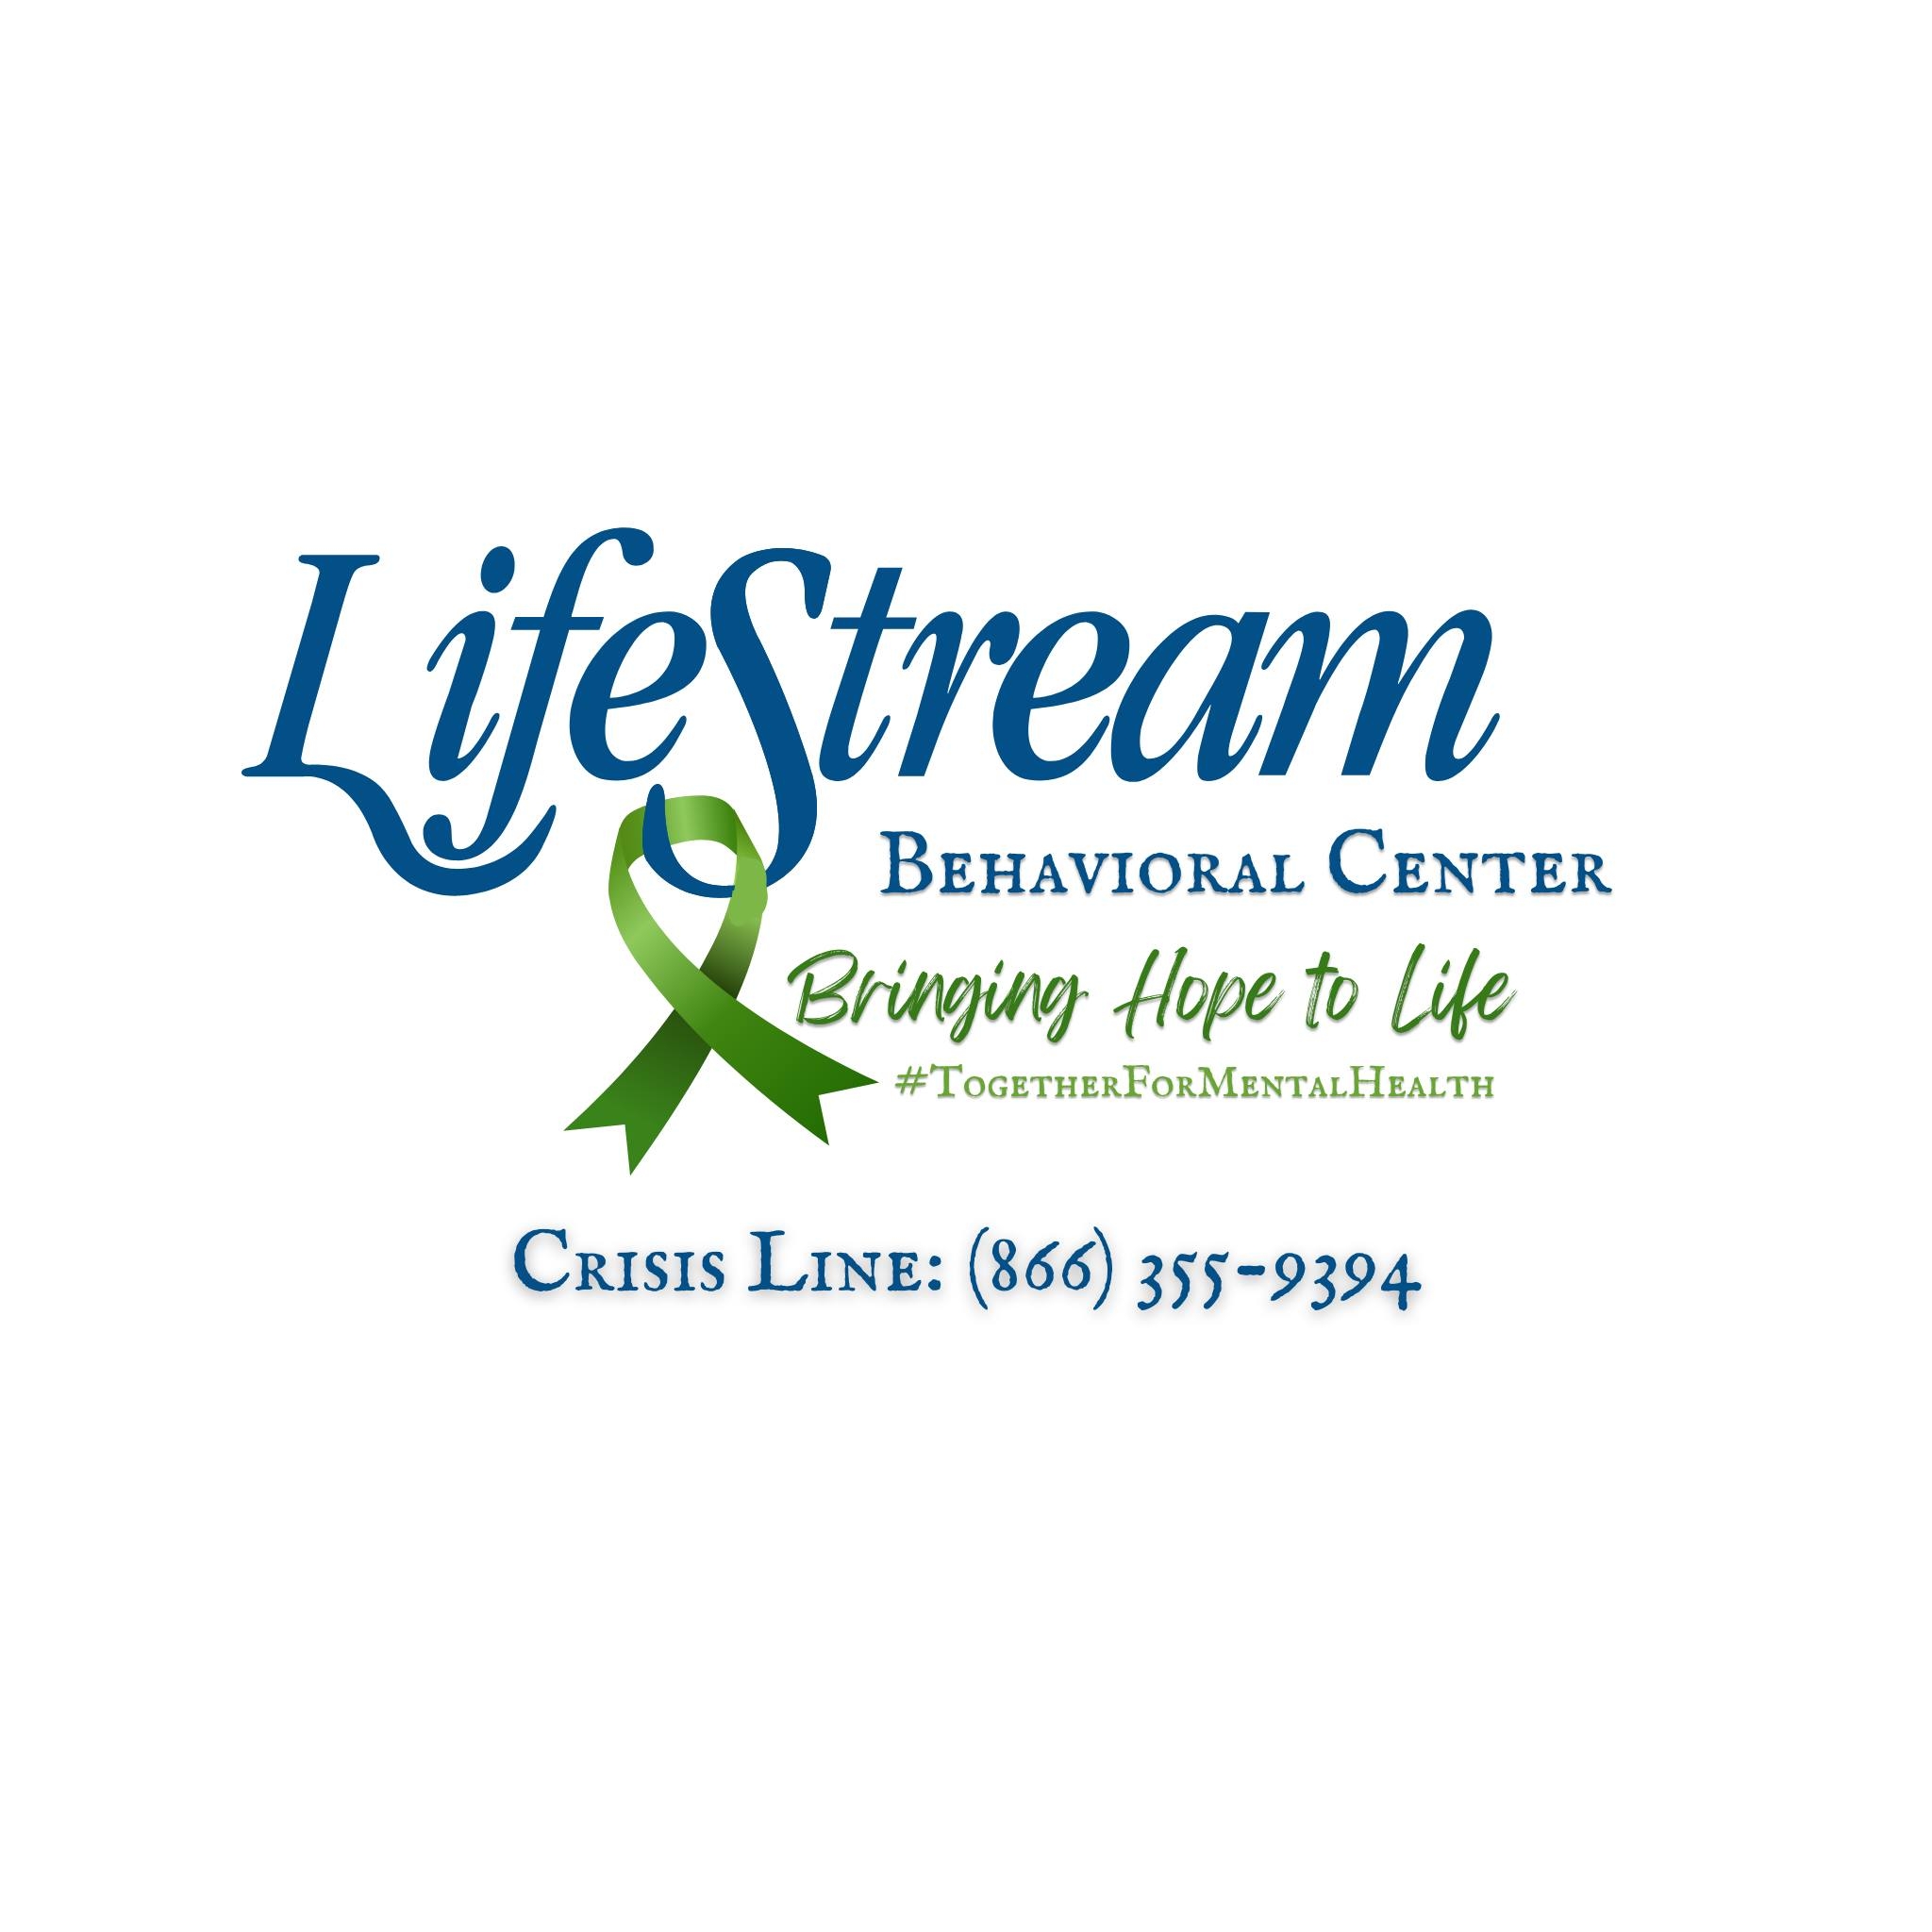 LifeStream Behavioral Center